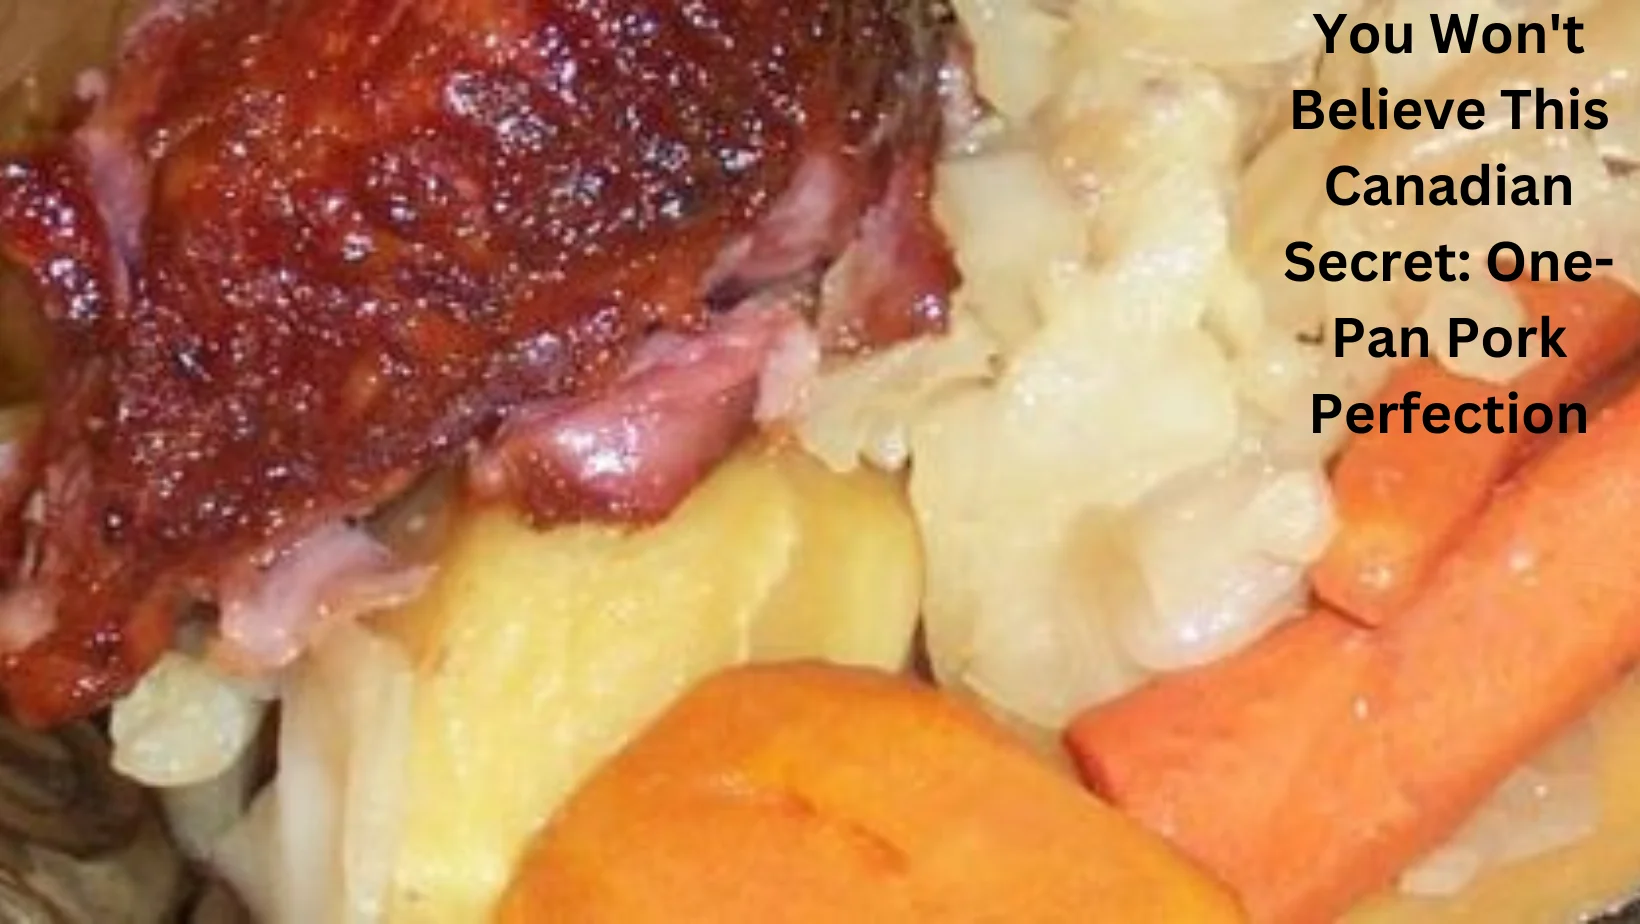 Easy Roast Pork Cottage Roll with Vegetables